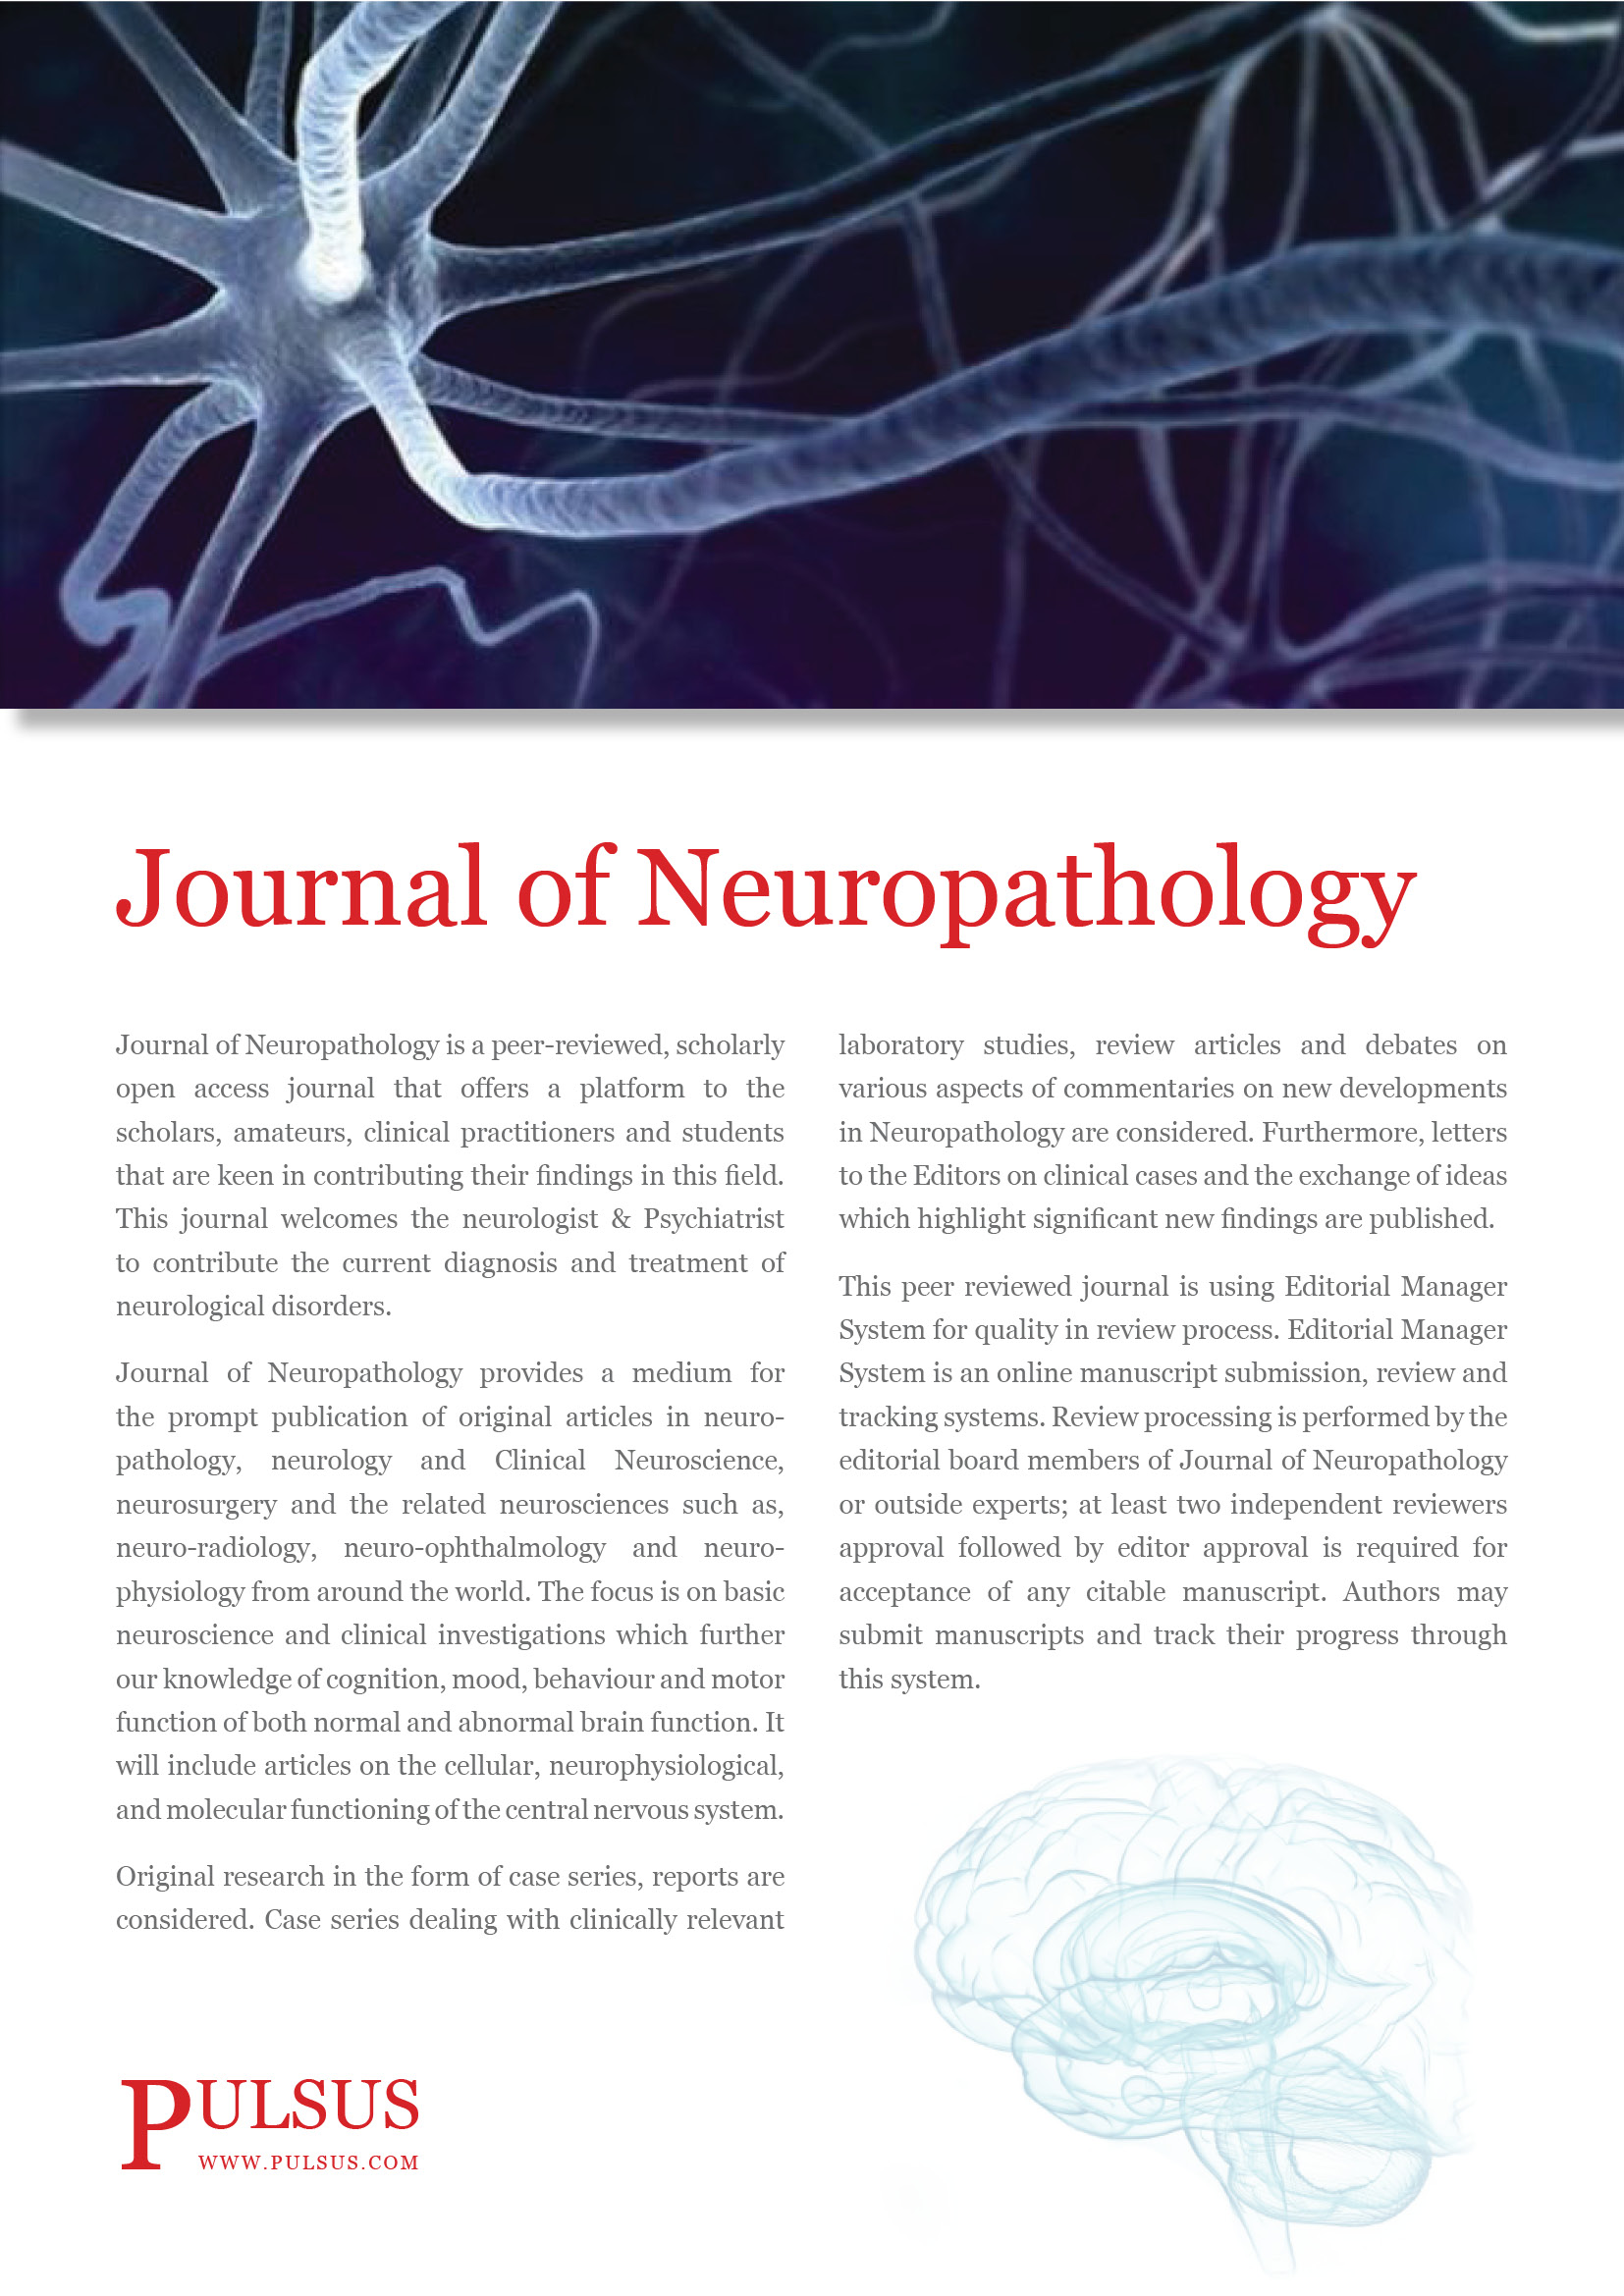 Journal of Neuropathology